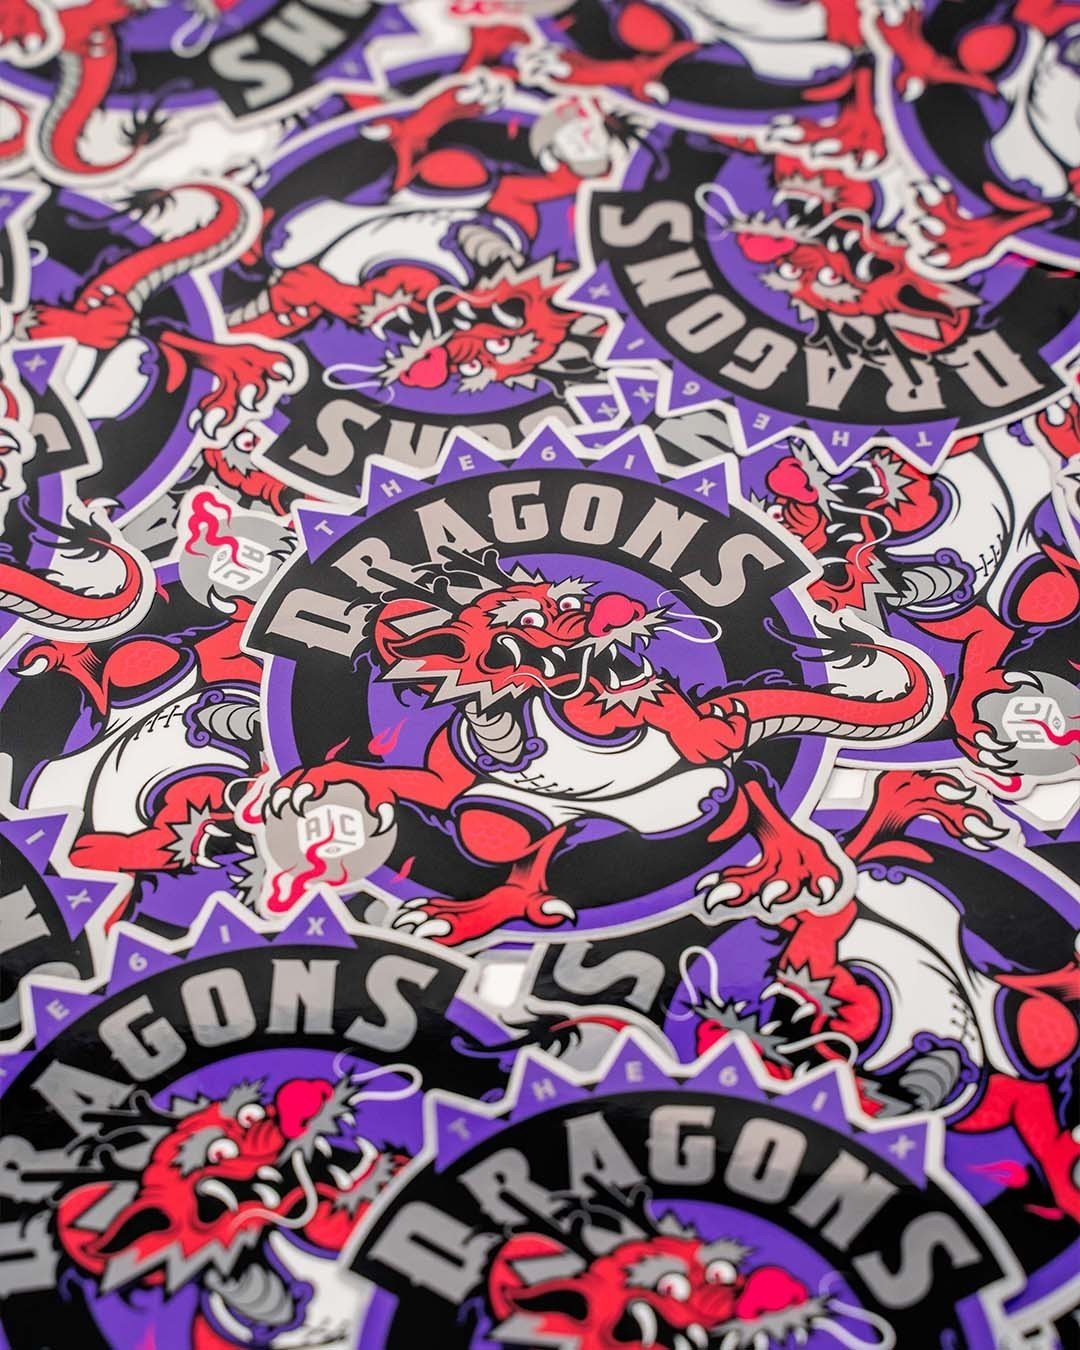 The 6ix REAL Dragon, Mirror Sticker ⁠
Made this for the year of dragon 2024. ⁠
.⁠
.⁠
.⁠
#Sticker #TorontoFun #Toronto #Raptors #TorontoRaptors #6 #6ix #TO #WeTheNorth #NorthOverEverything #TheNorth #NBA #TorontoBasketball #graphicdesign #illustration